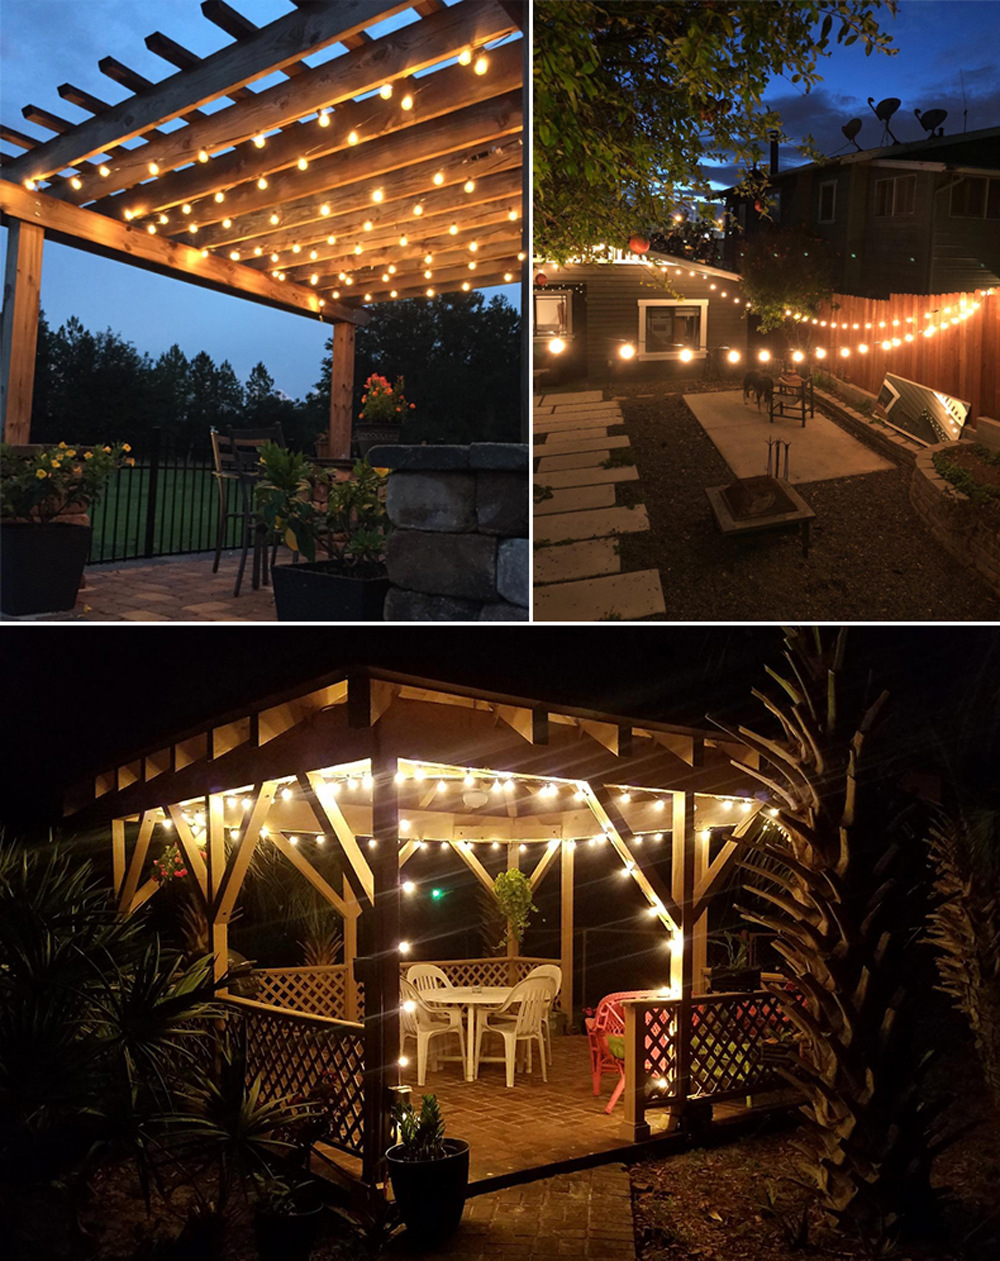 G40-LED-Retro-Light-String-110V220V-Outdoor-Party-Garden-Yard-Home-Decoration-Fairy-Lamp-Bulb-Waterp-1870496-4